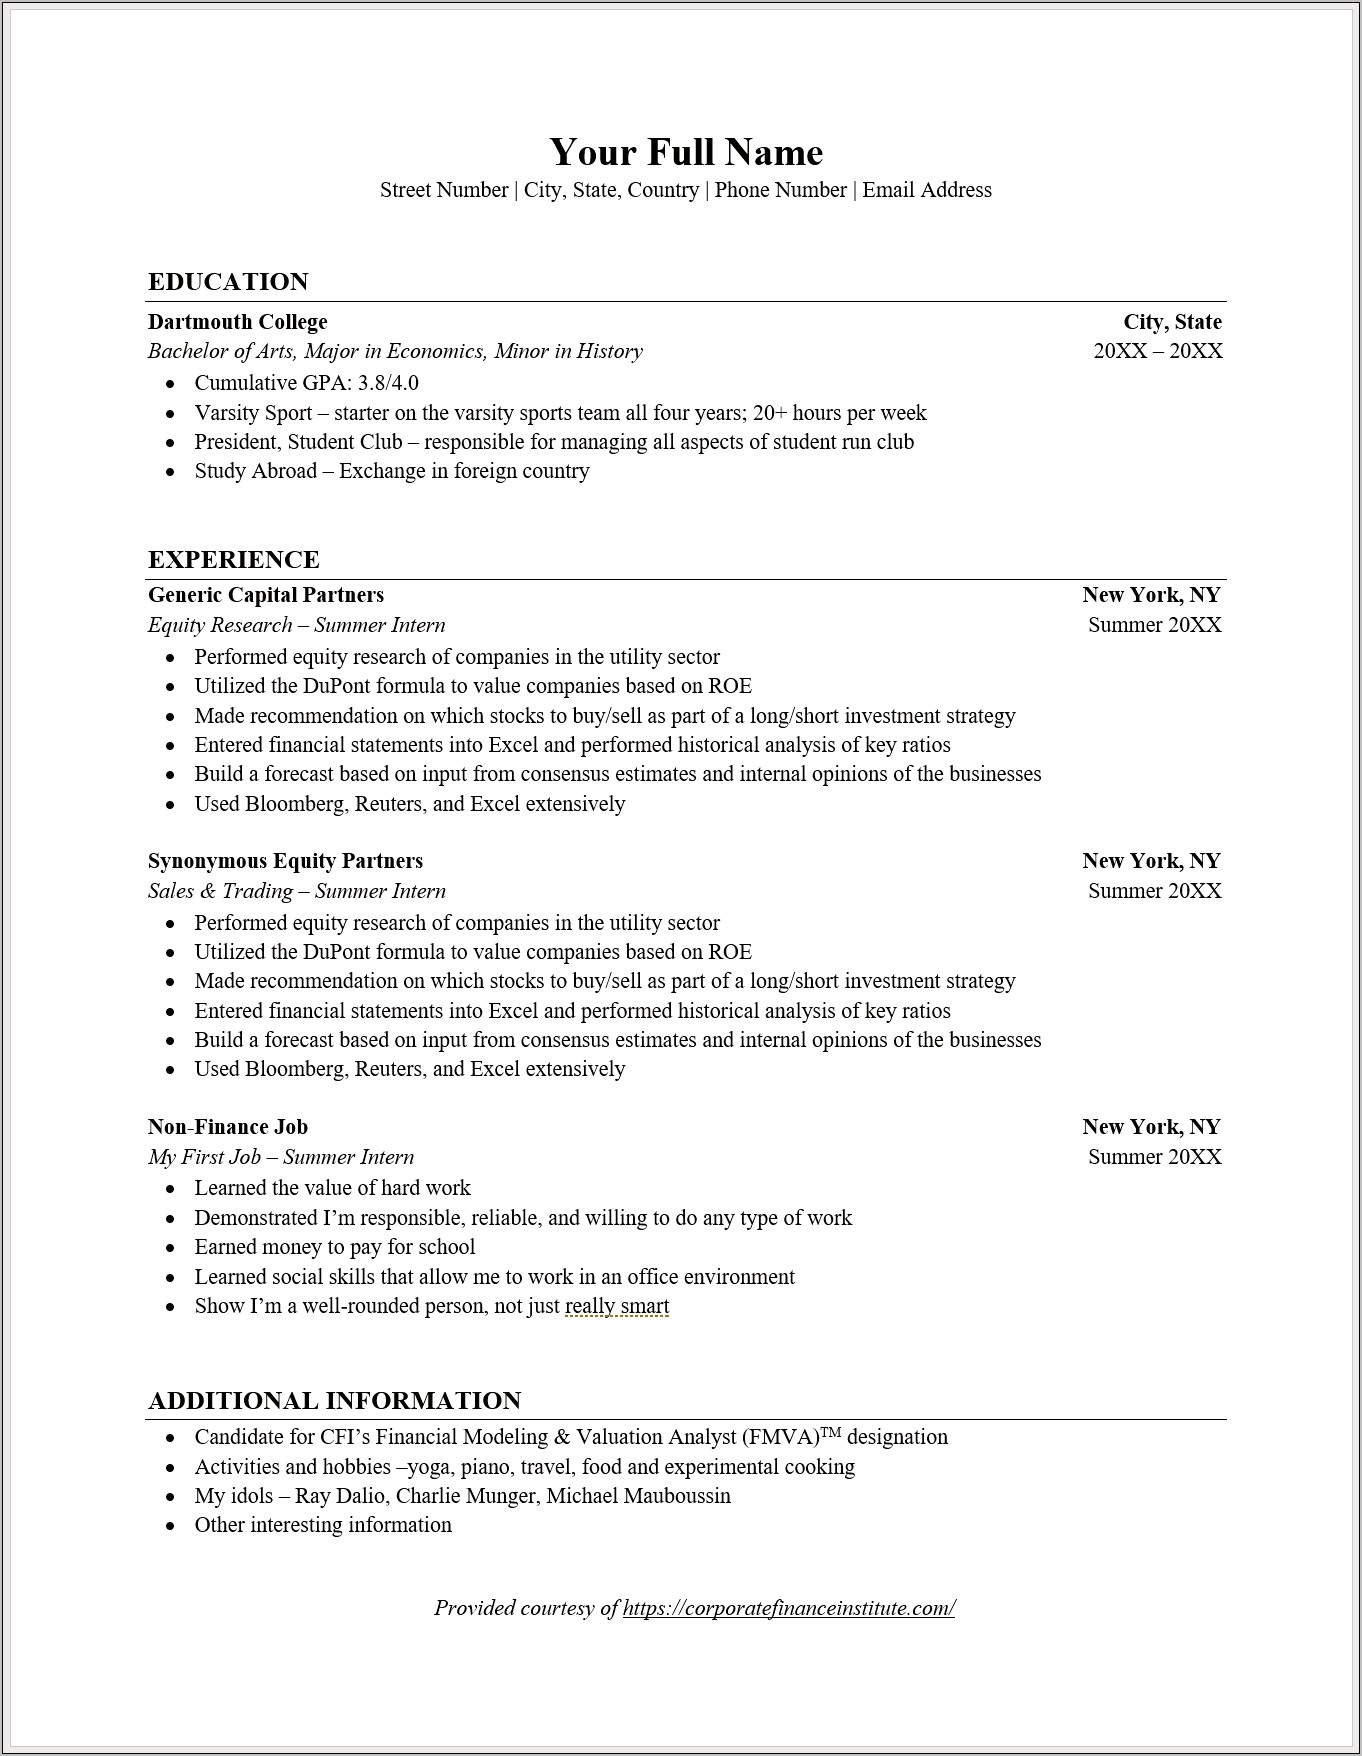 Listing All Jobs On Resume